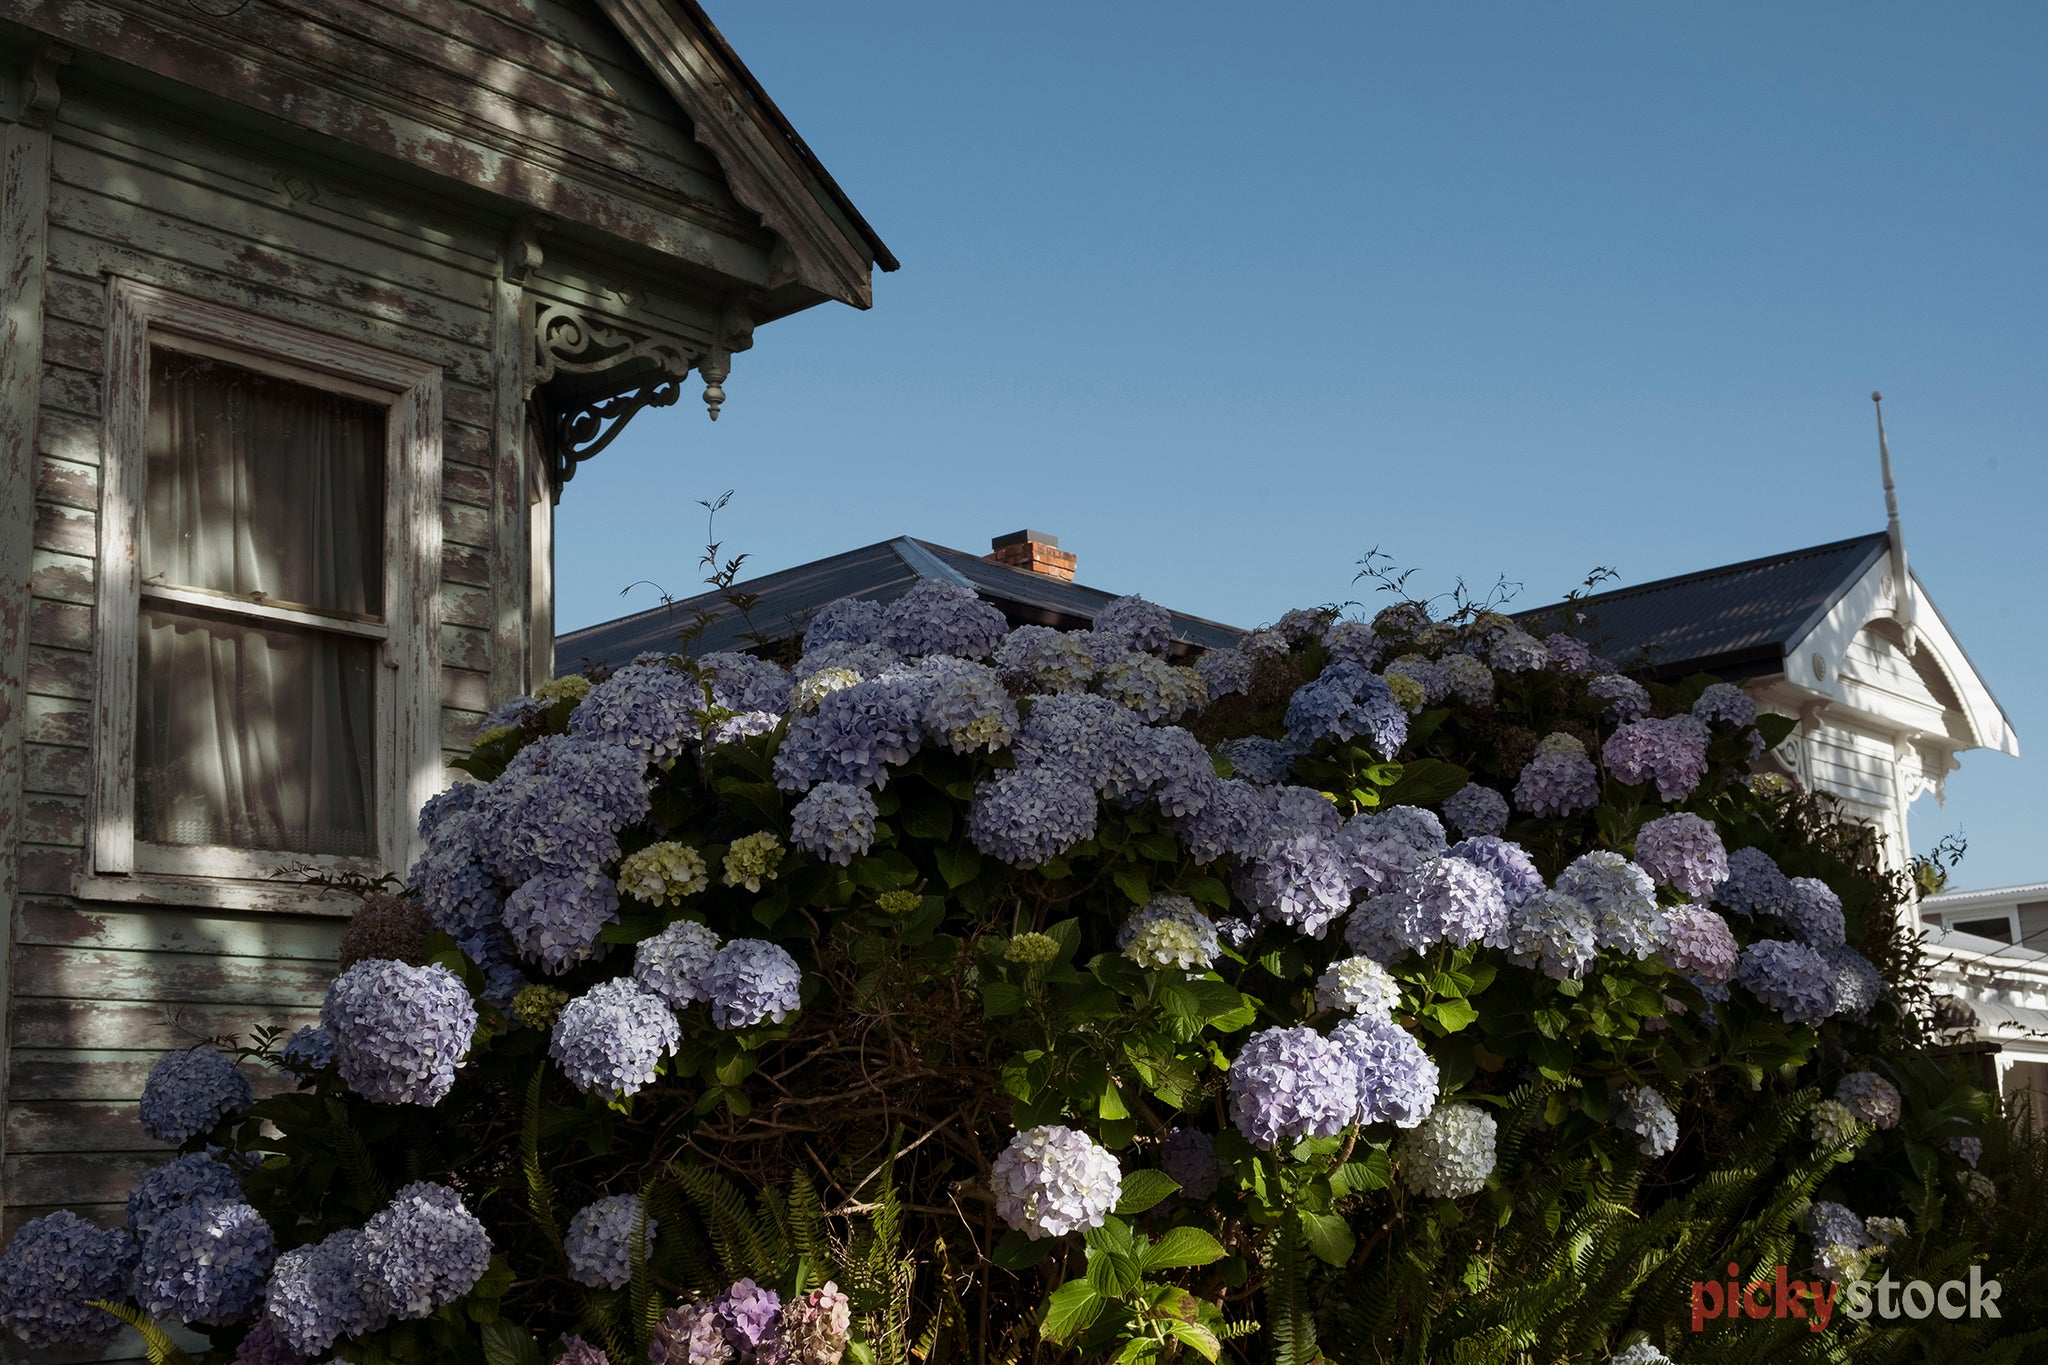 Lilac hydrangeas on the bush against a rundown weatherboard house.